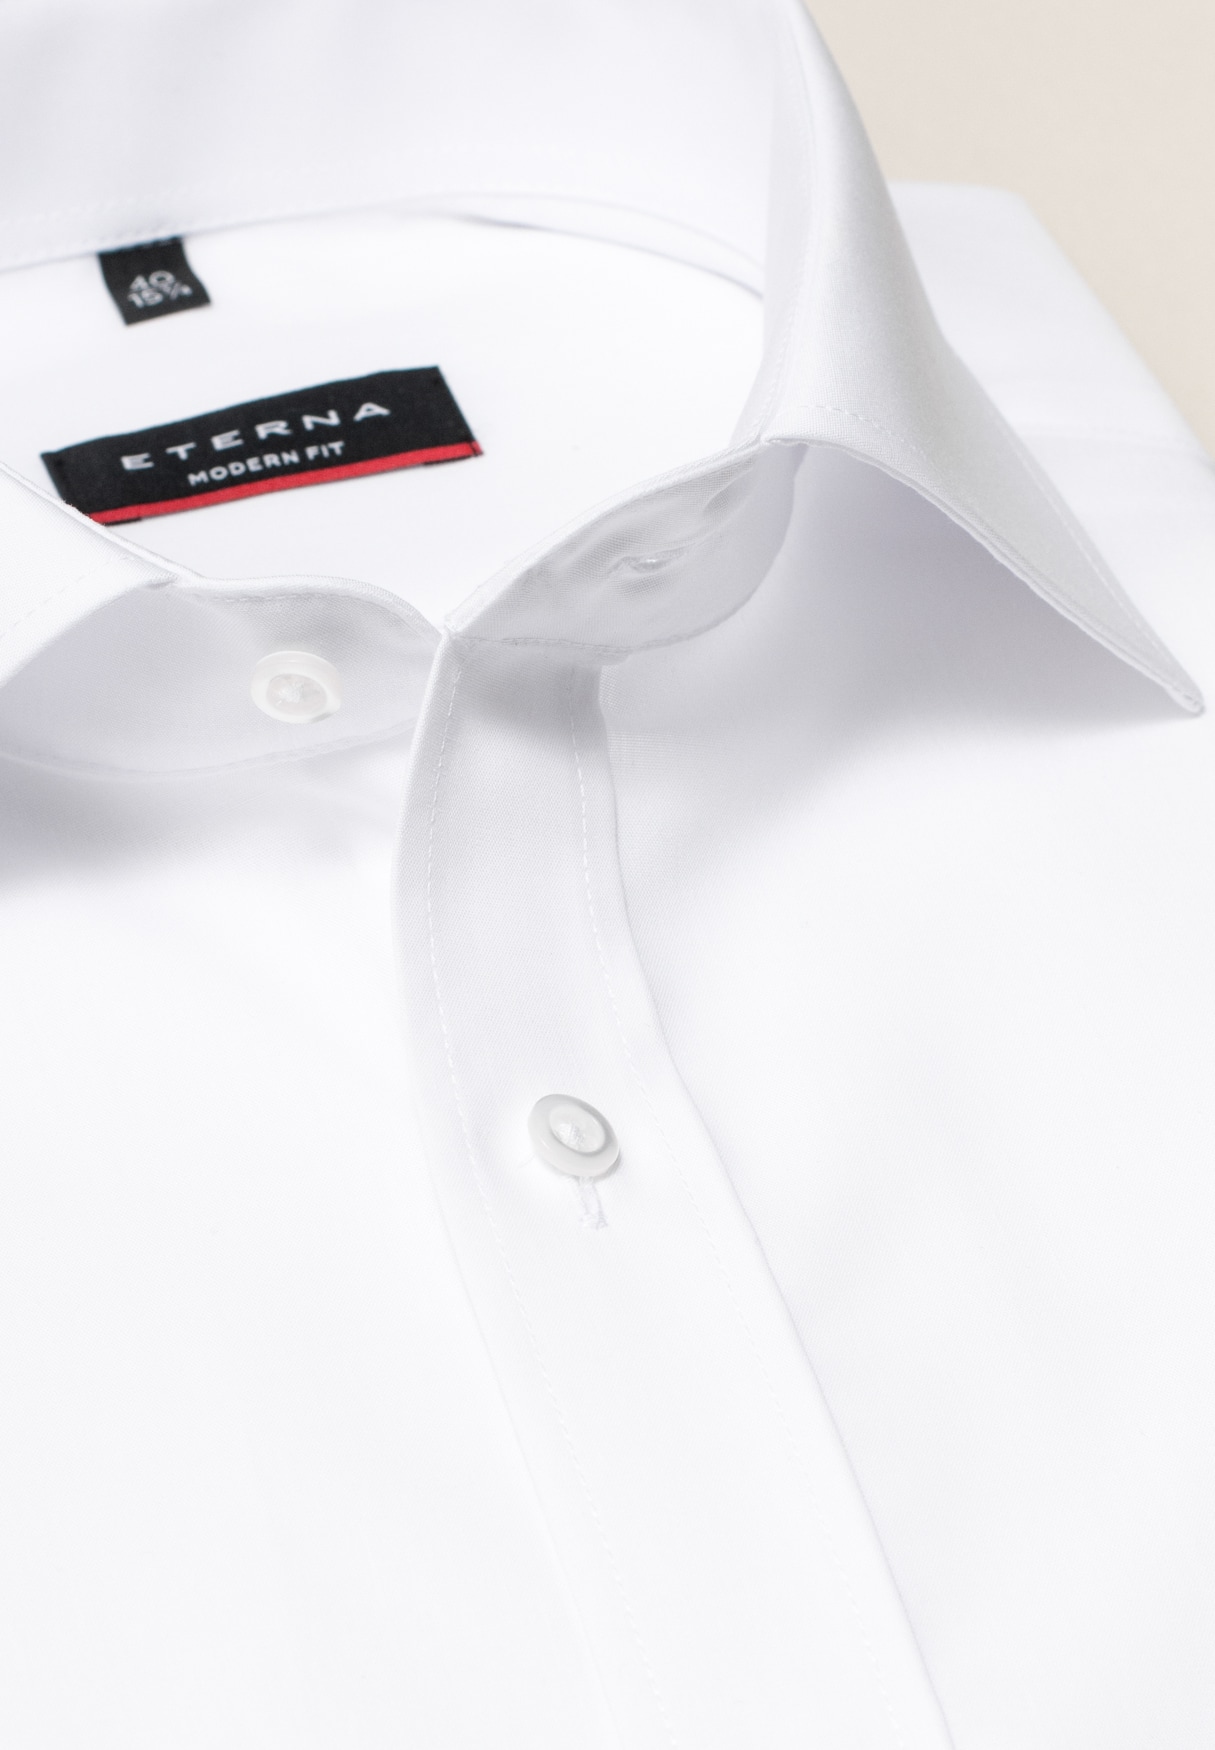 MODERN FIT Shirt unifarben | weiß 41 Langarm Original | 1SH00113-00-01-41-1/1 in weiß | 